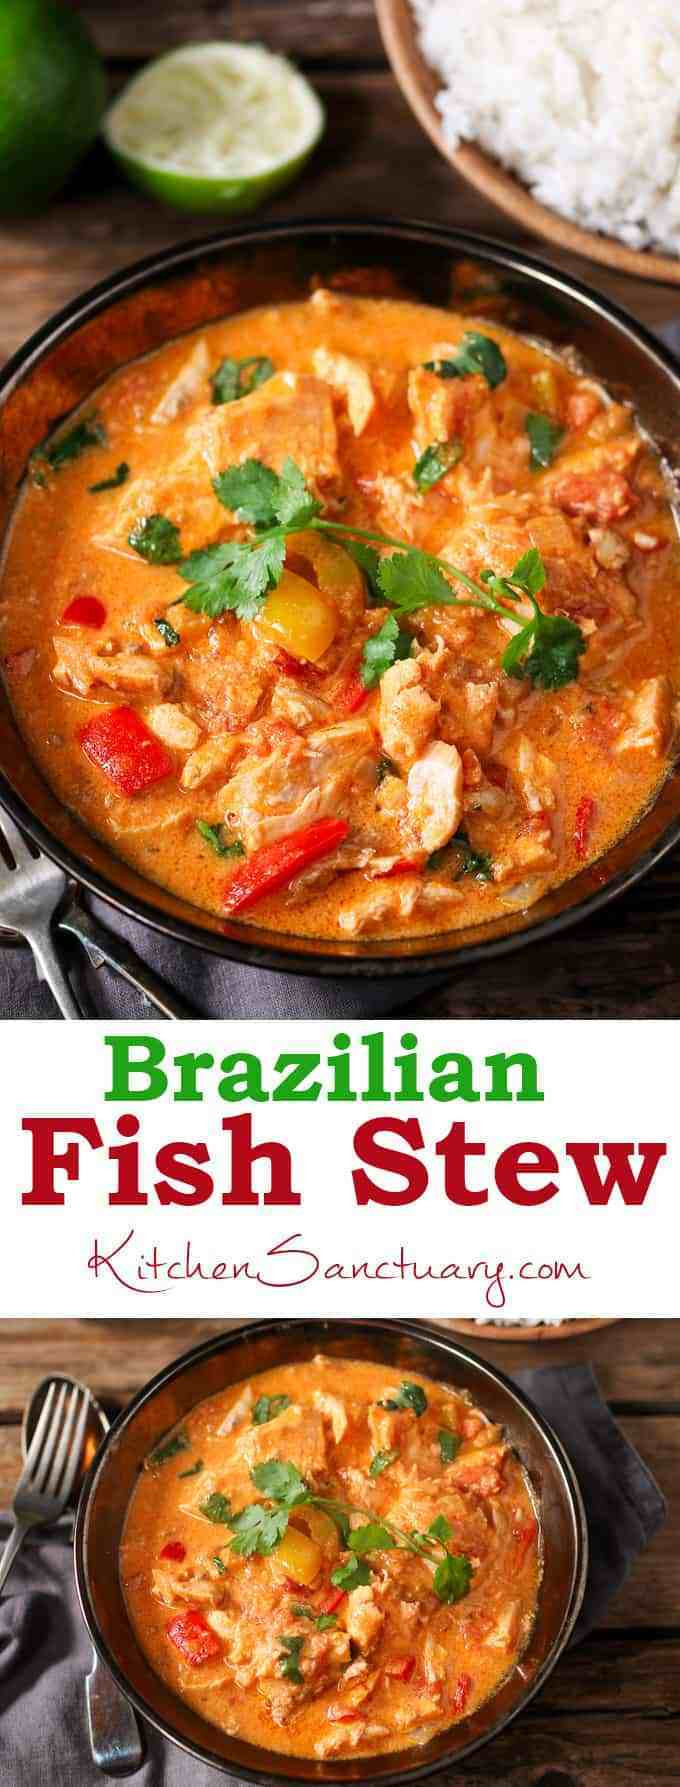 Brazilian Fish Stew
 Brazilian Fish Stew Nicky s Kitchen Sanctuary